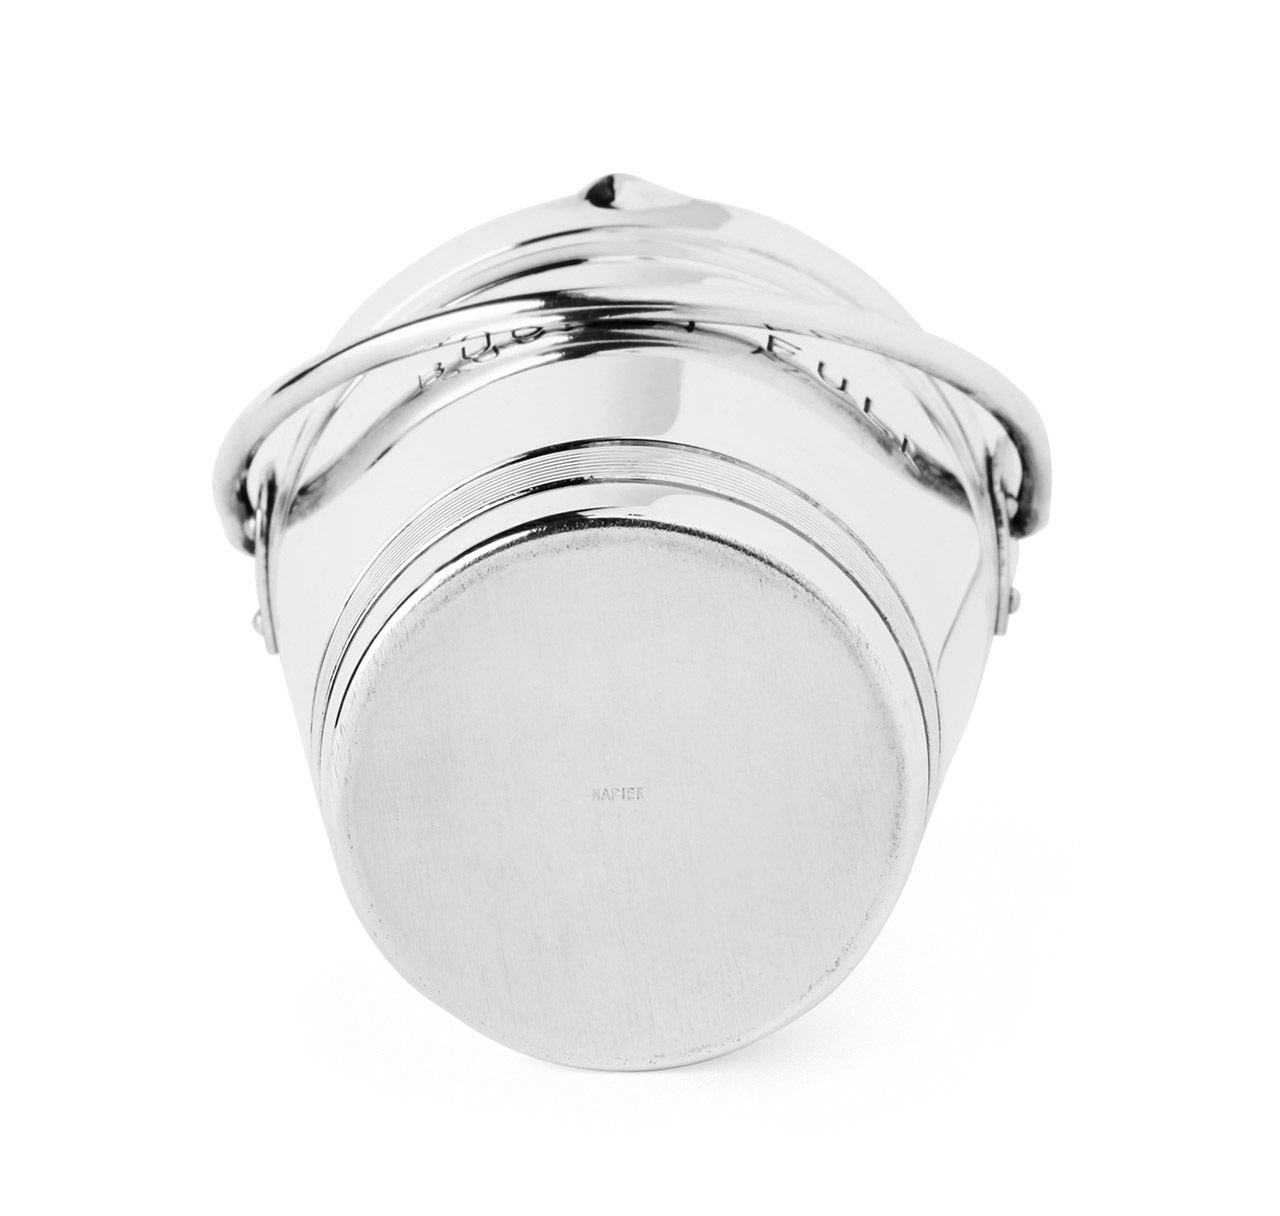 Napier Silver-Plated Bucket Full Jigger